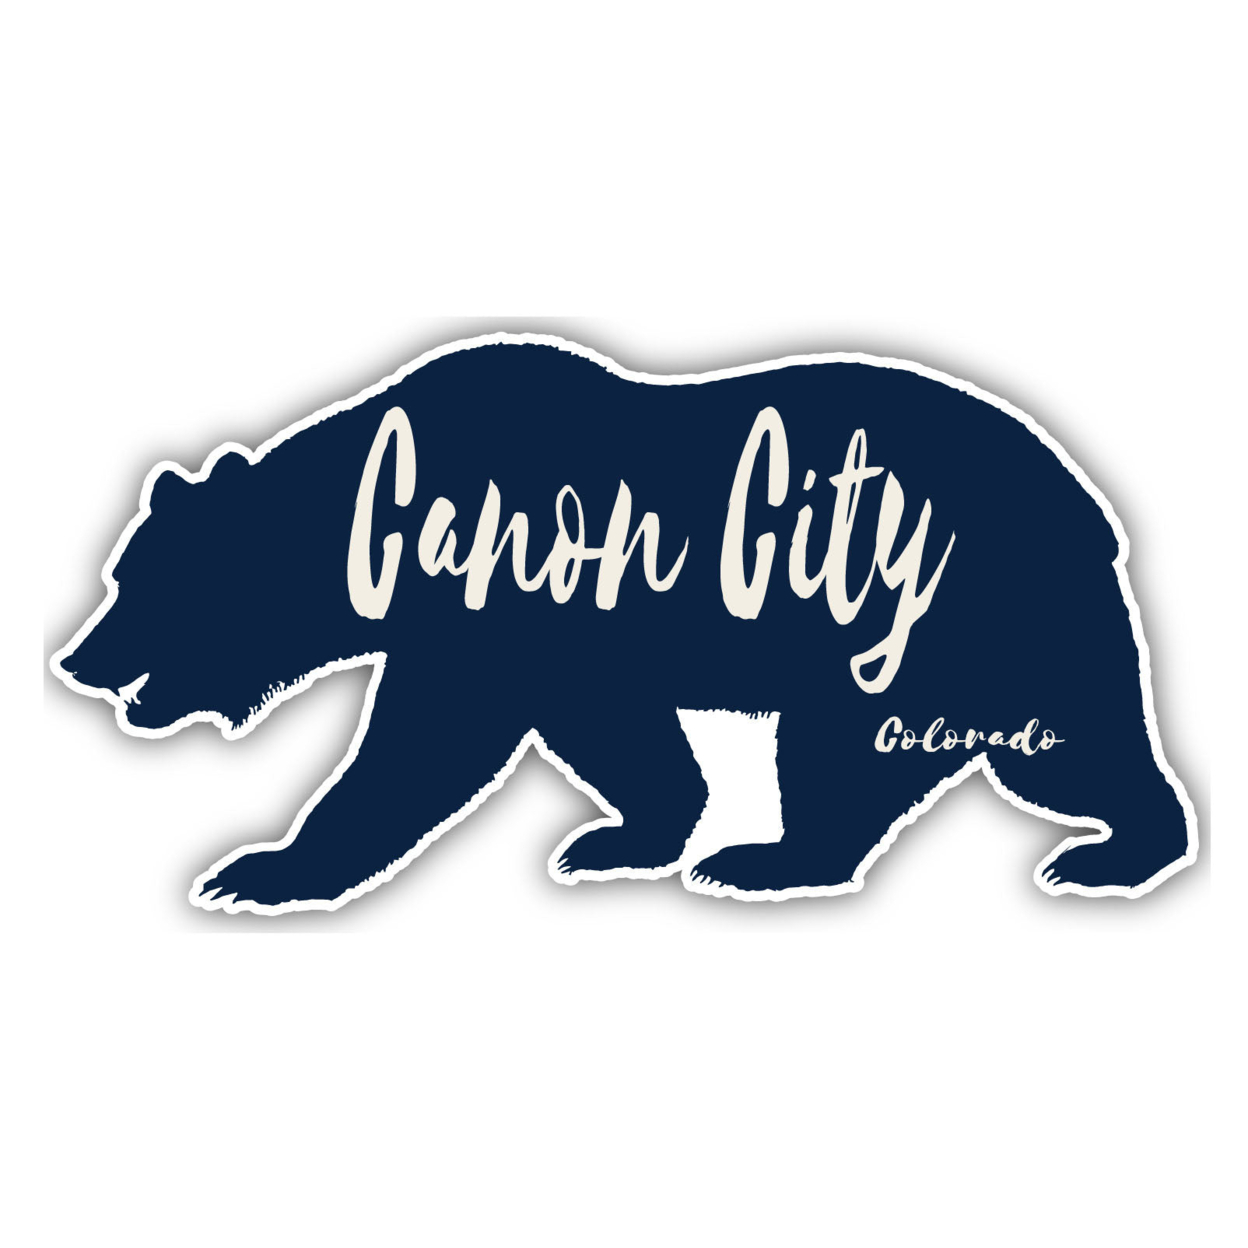 Canon City Colorado Souvenir Decorative Stickers (Choose Theme And Size) - Single Unit, 4-Inch, Bear